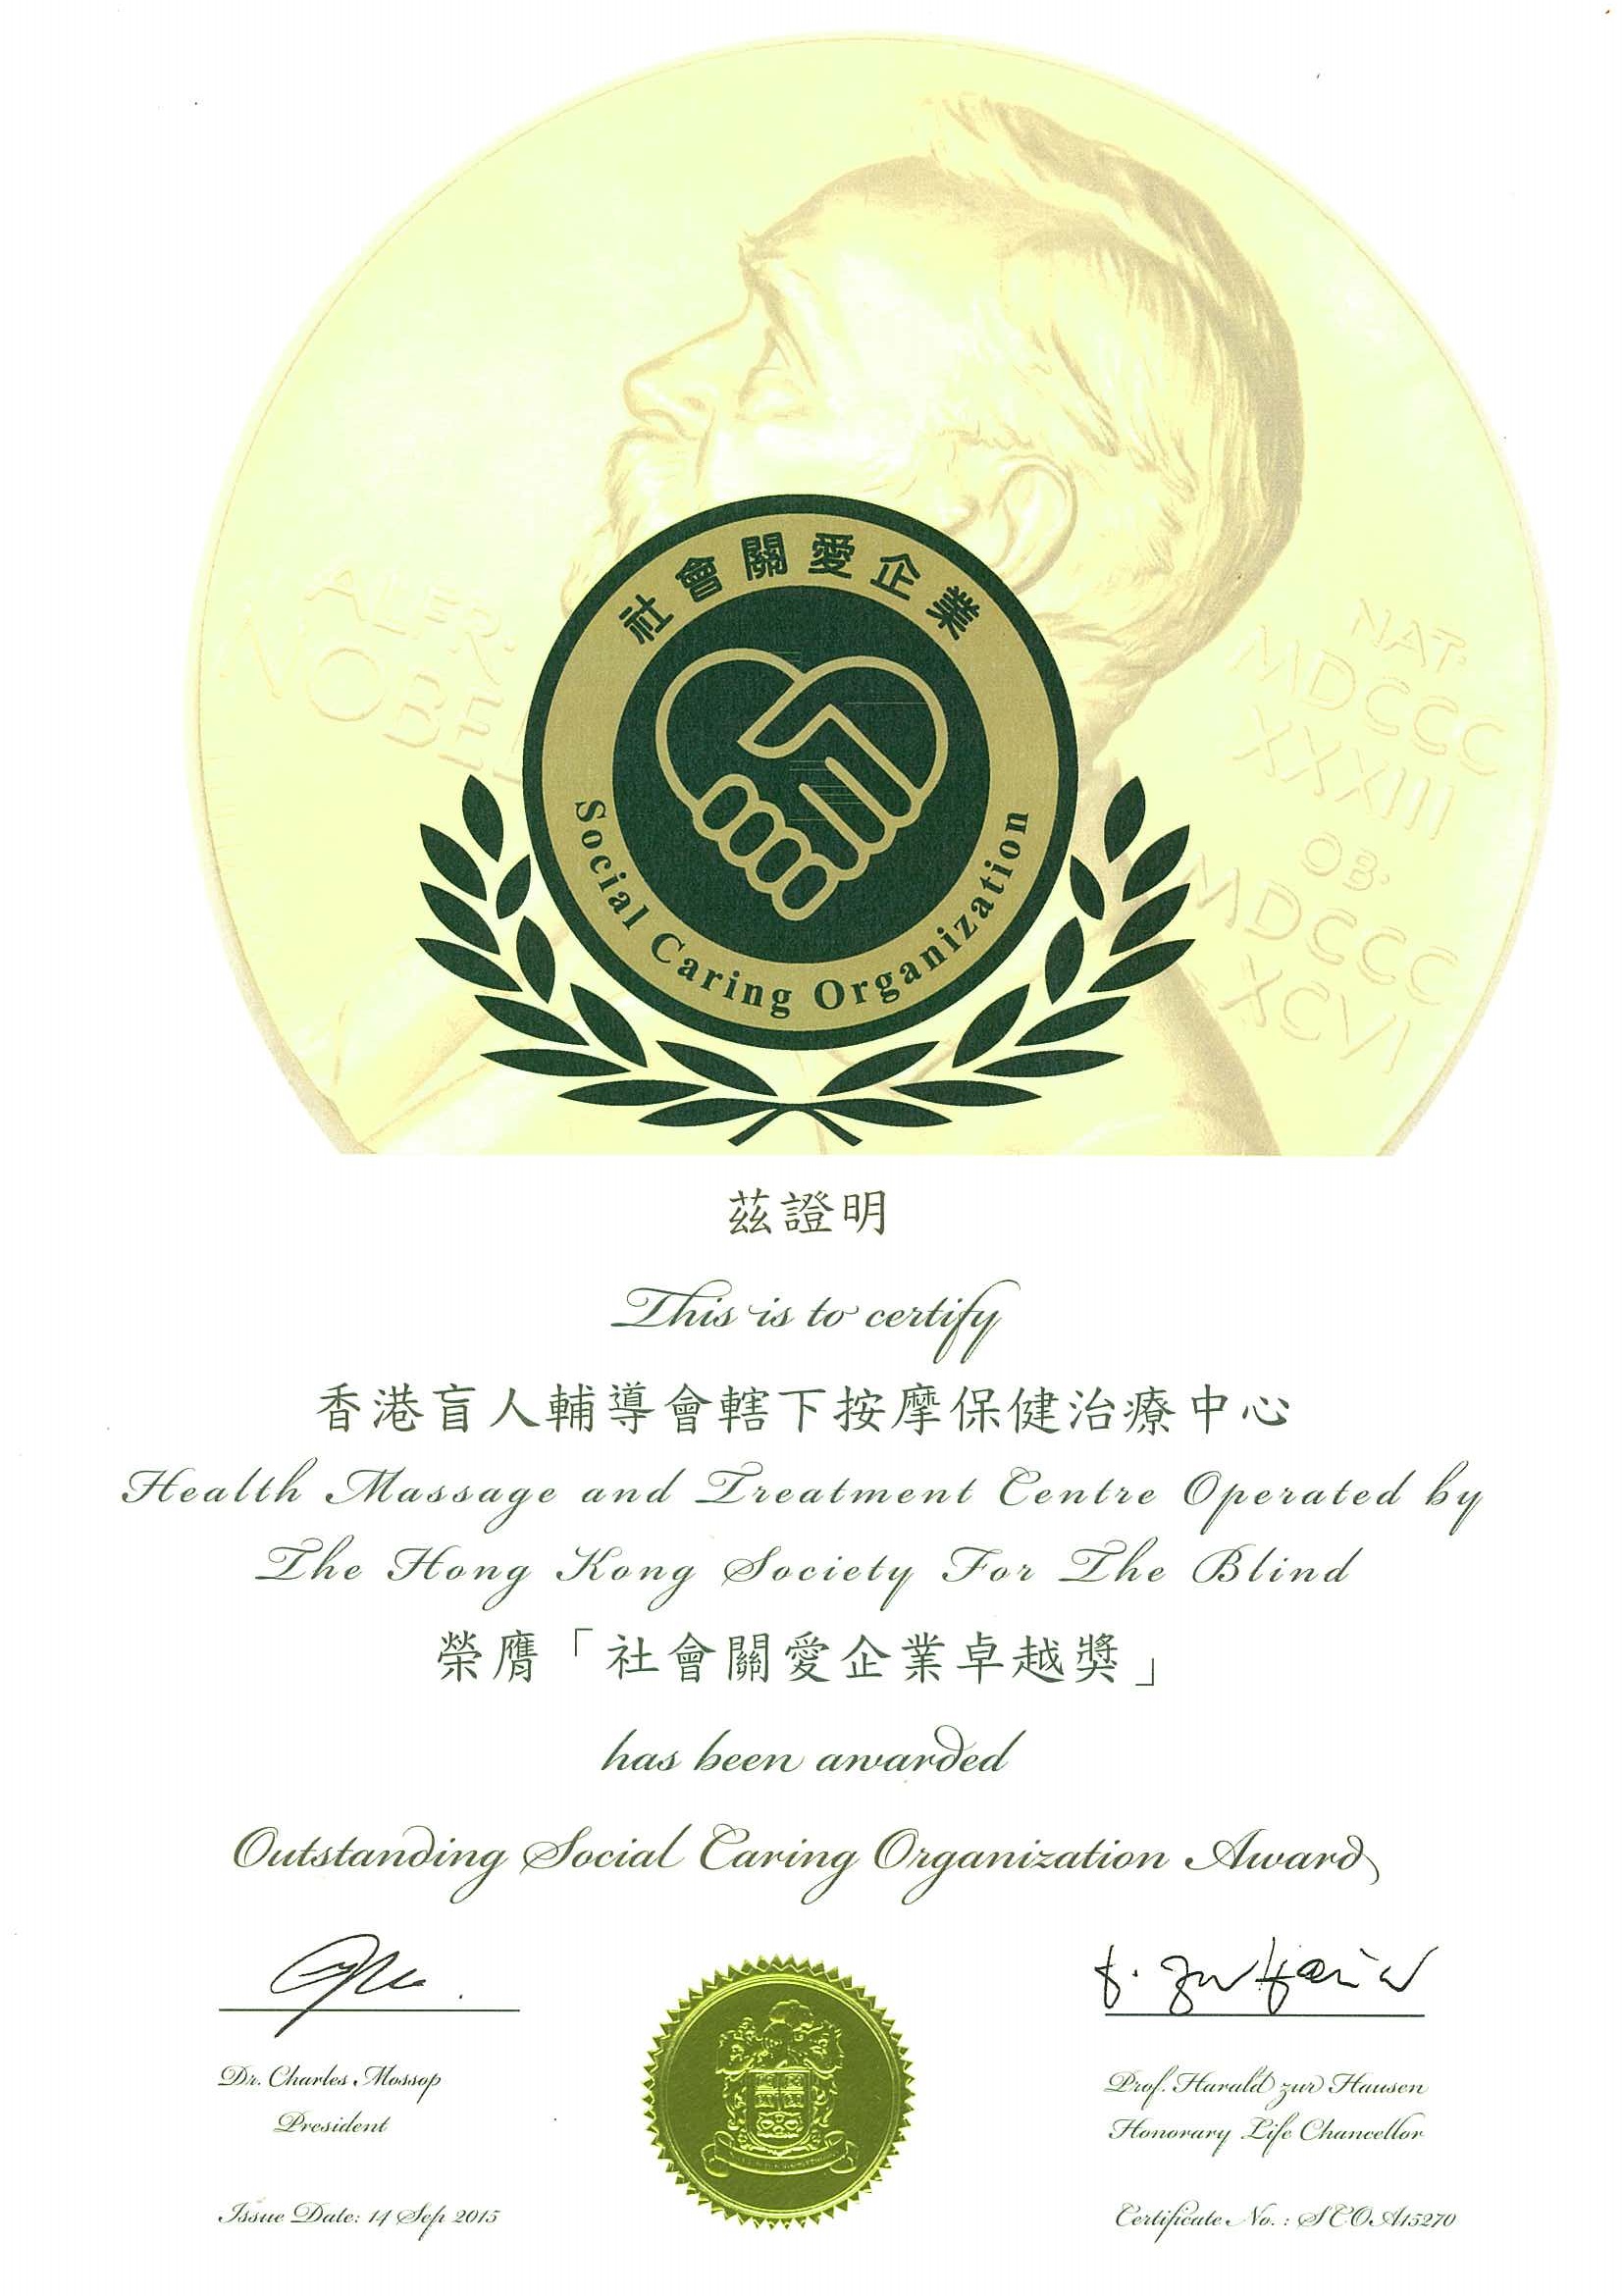 Outstanding Social Caring Organization Award